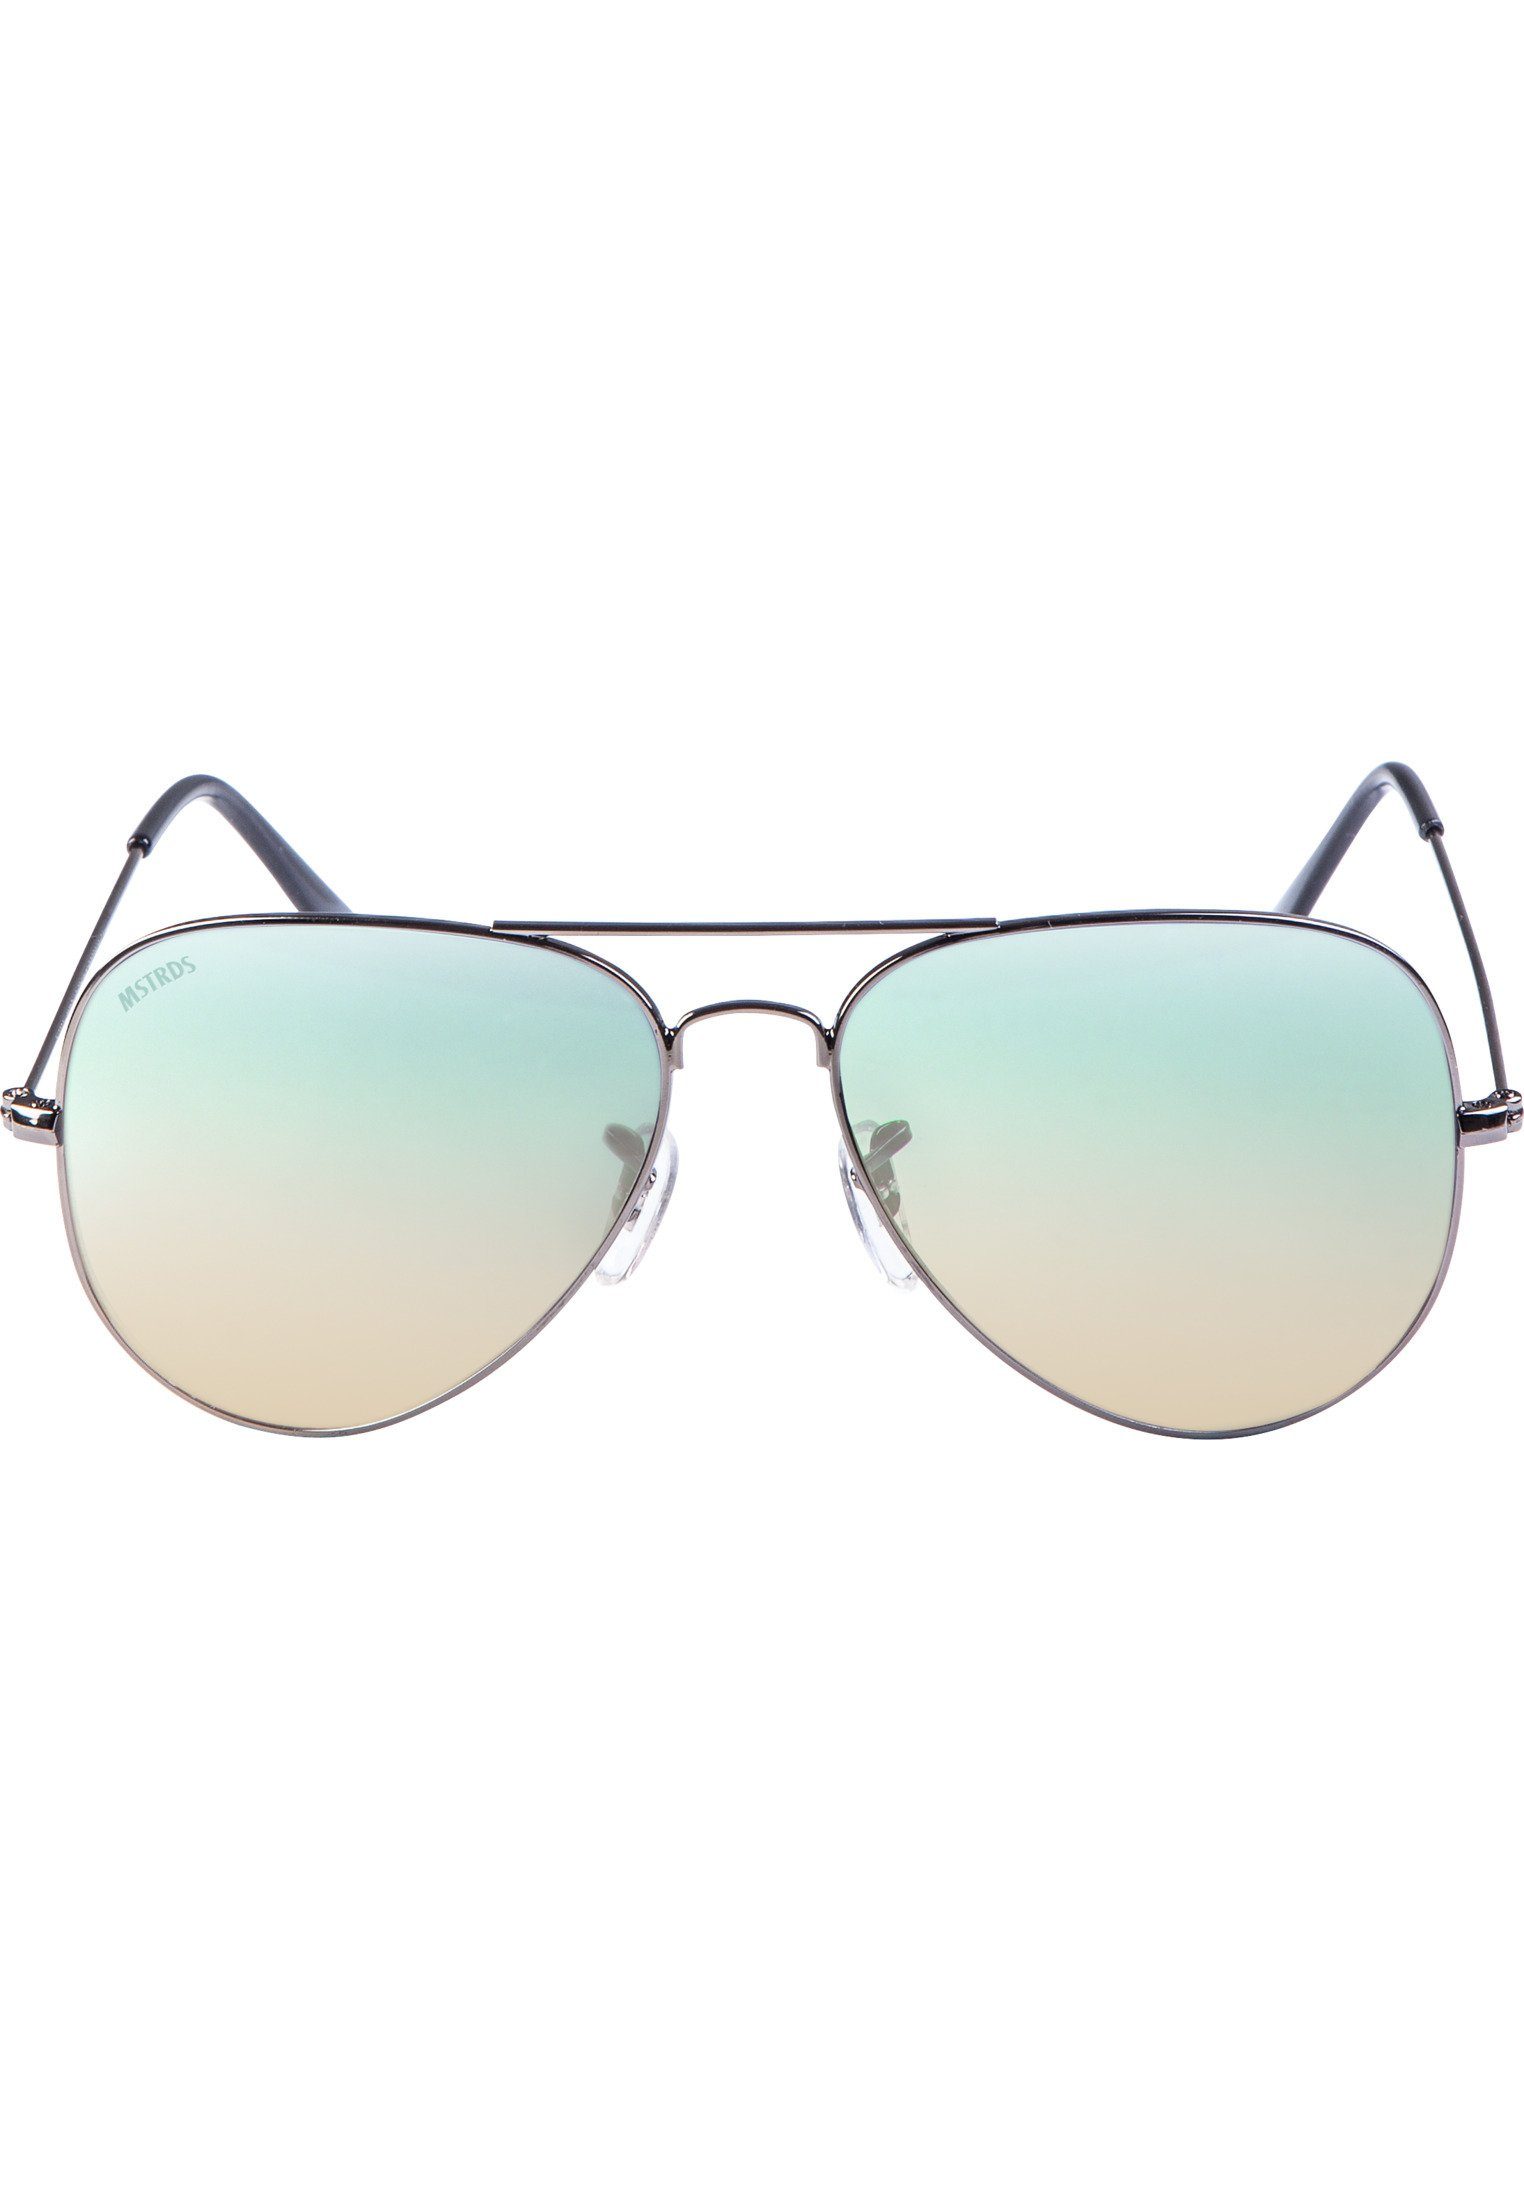 Sonnenbrille MSTRDS gun/blue Sunglasses PureAv Accessoires